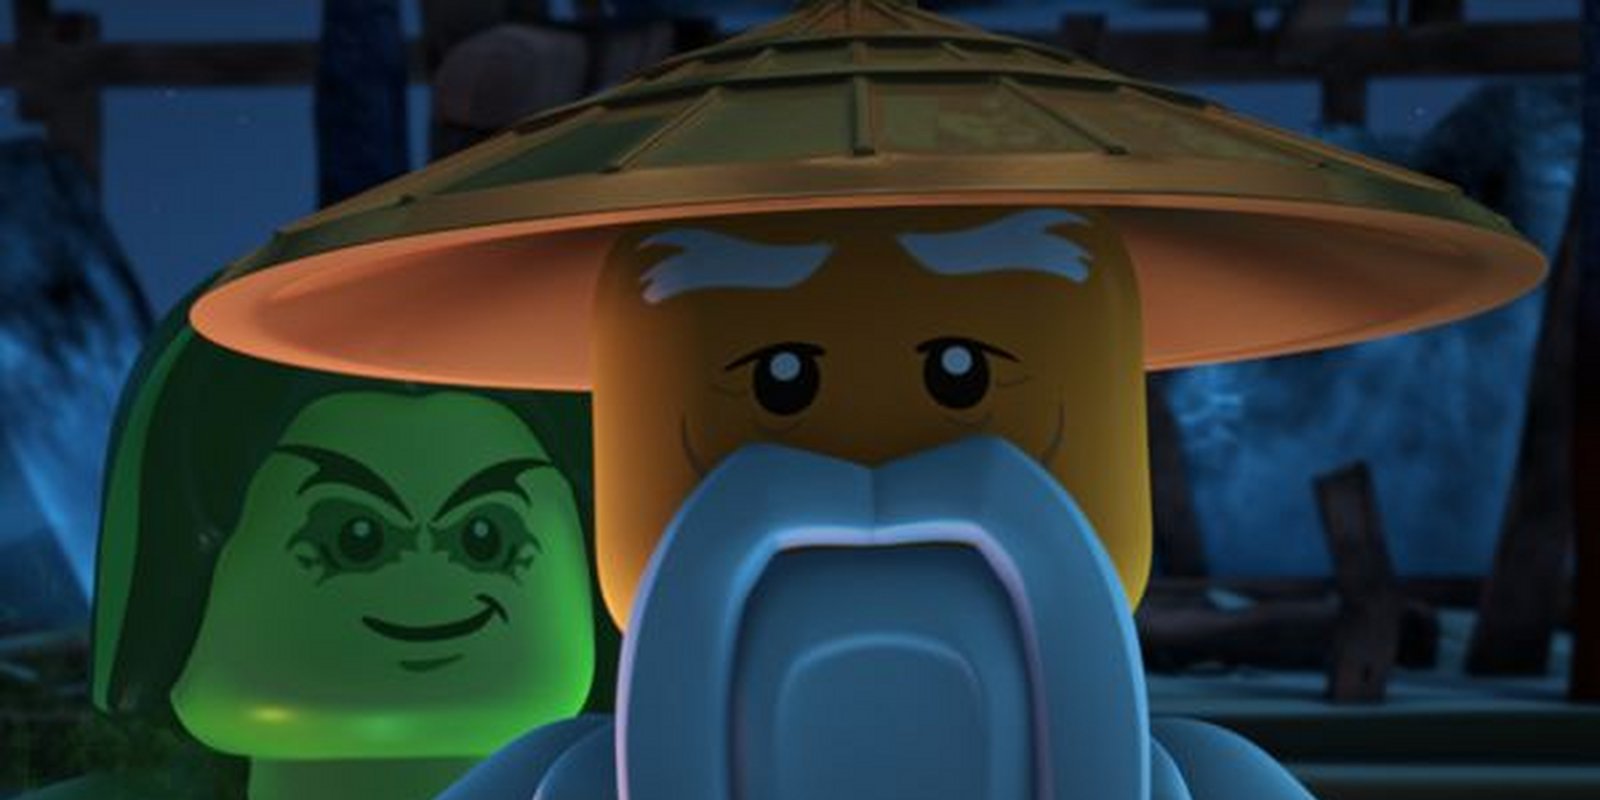 LEGO Ninjago - Tag der Erinnerungen